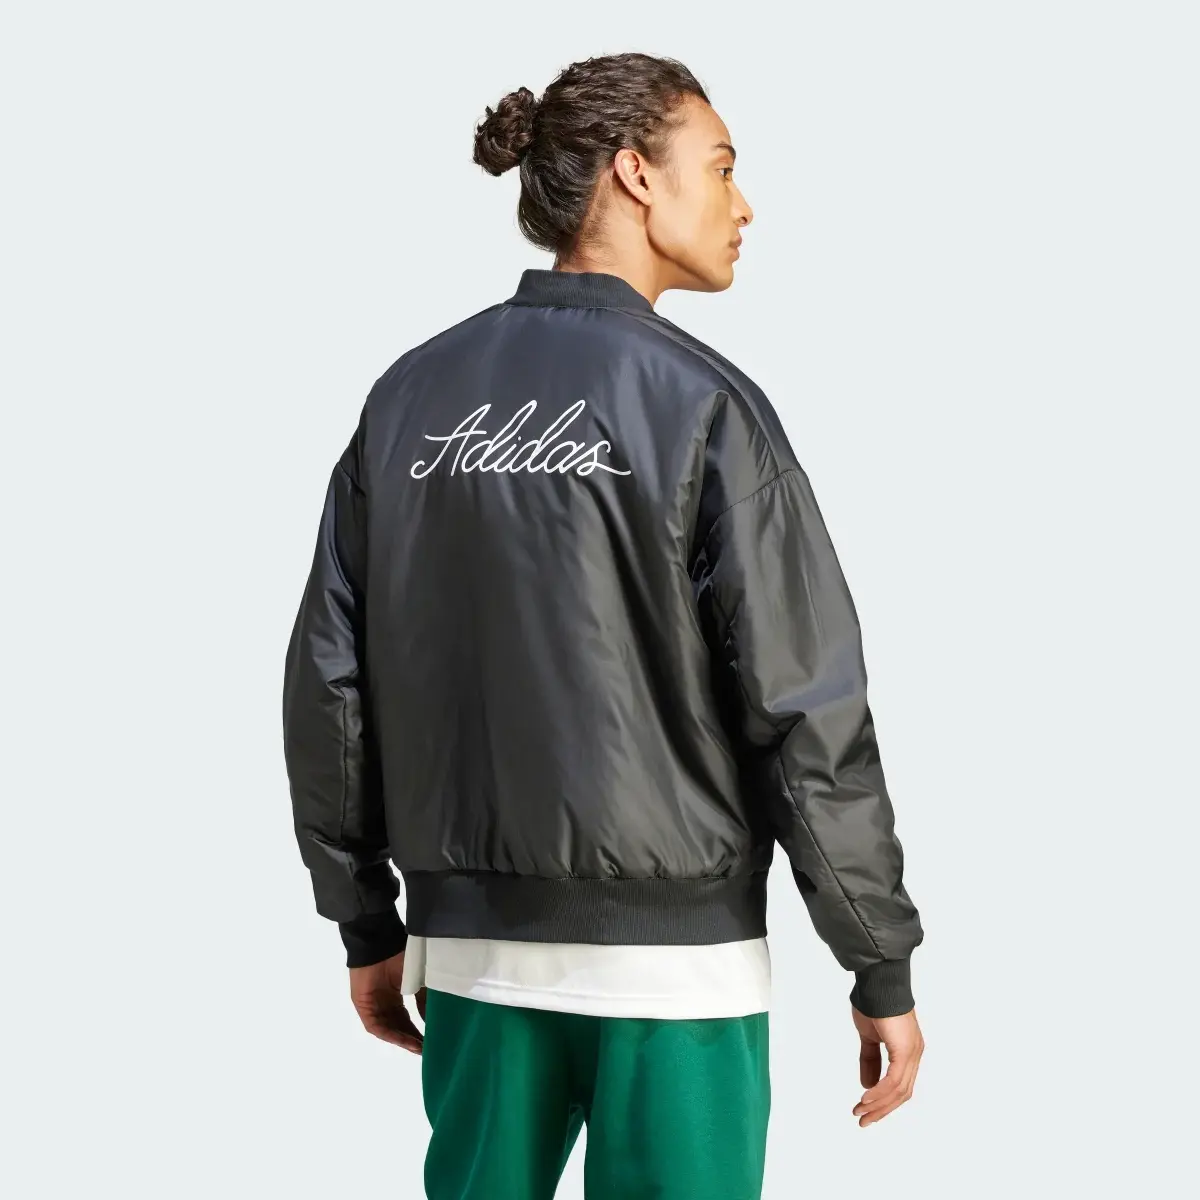 Adidas Brand Love Bomber Jacket. 3